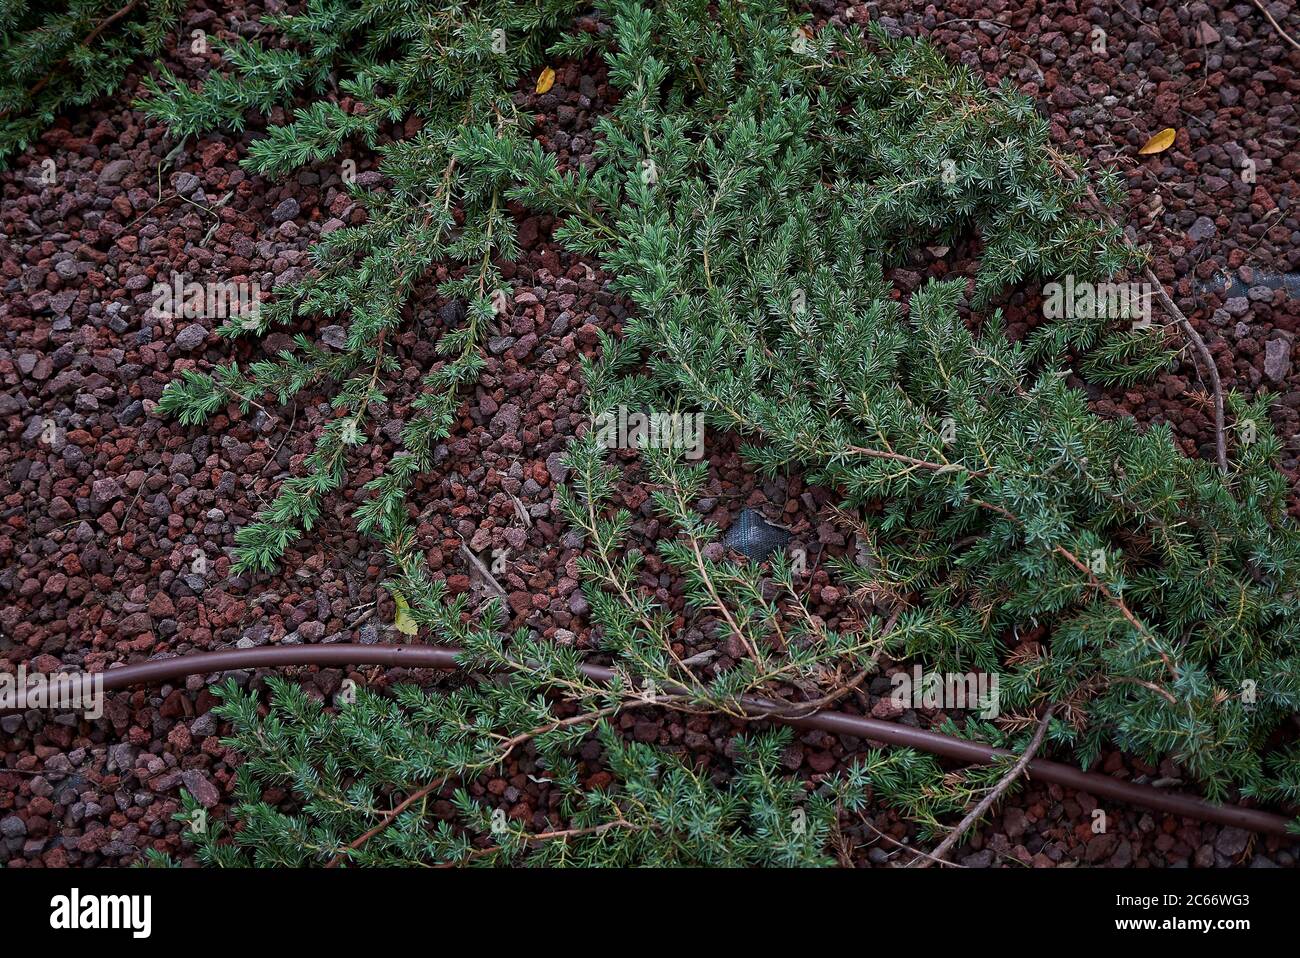 Juniperus formosana shrub in a flowerbed Stock Photo